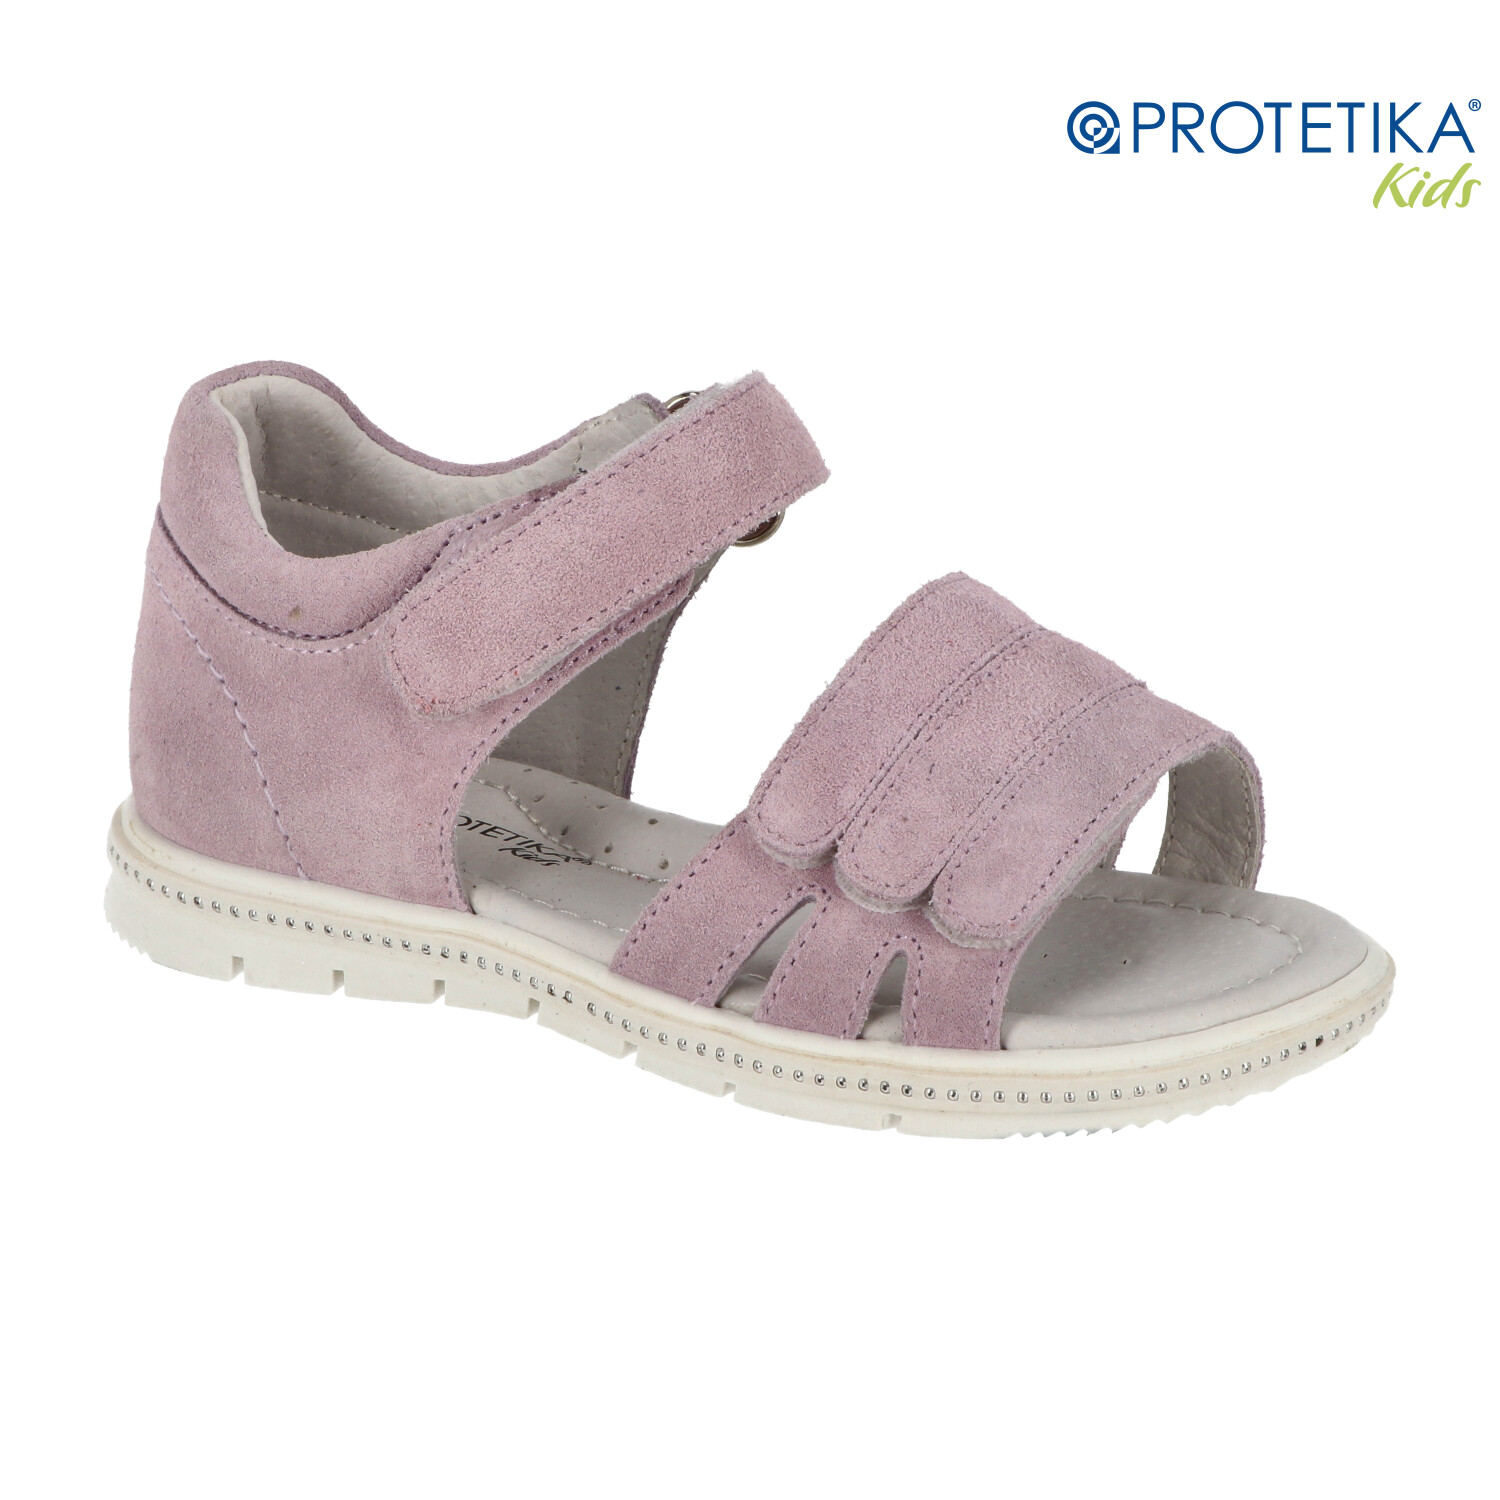 Protetika - topánky KLARA purple